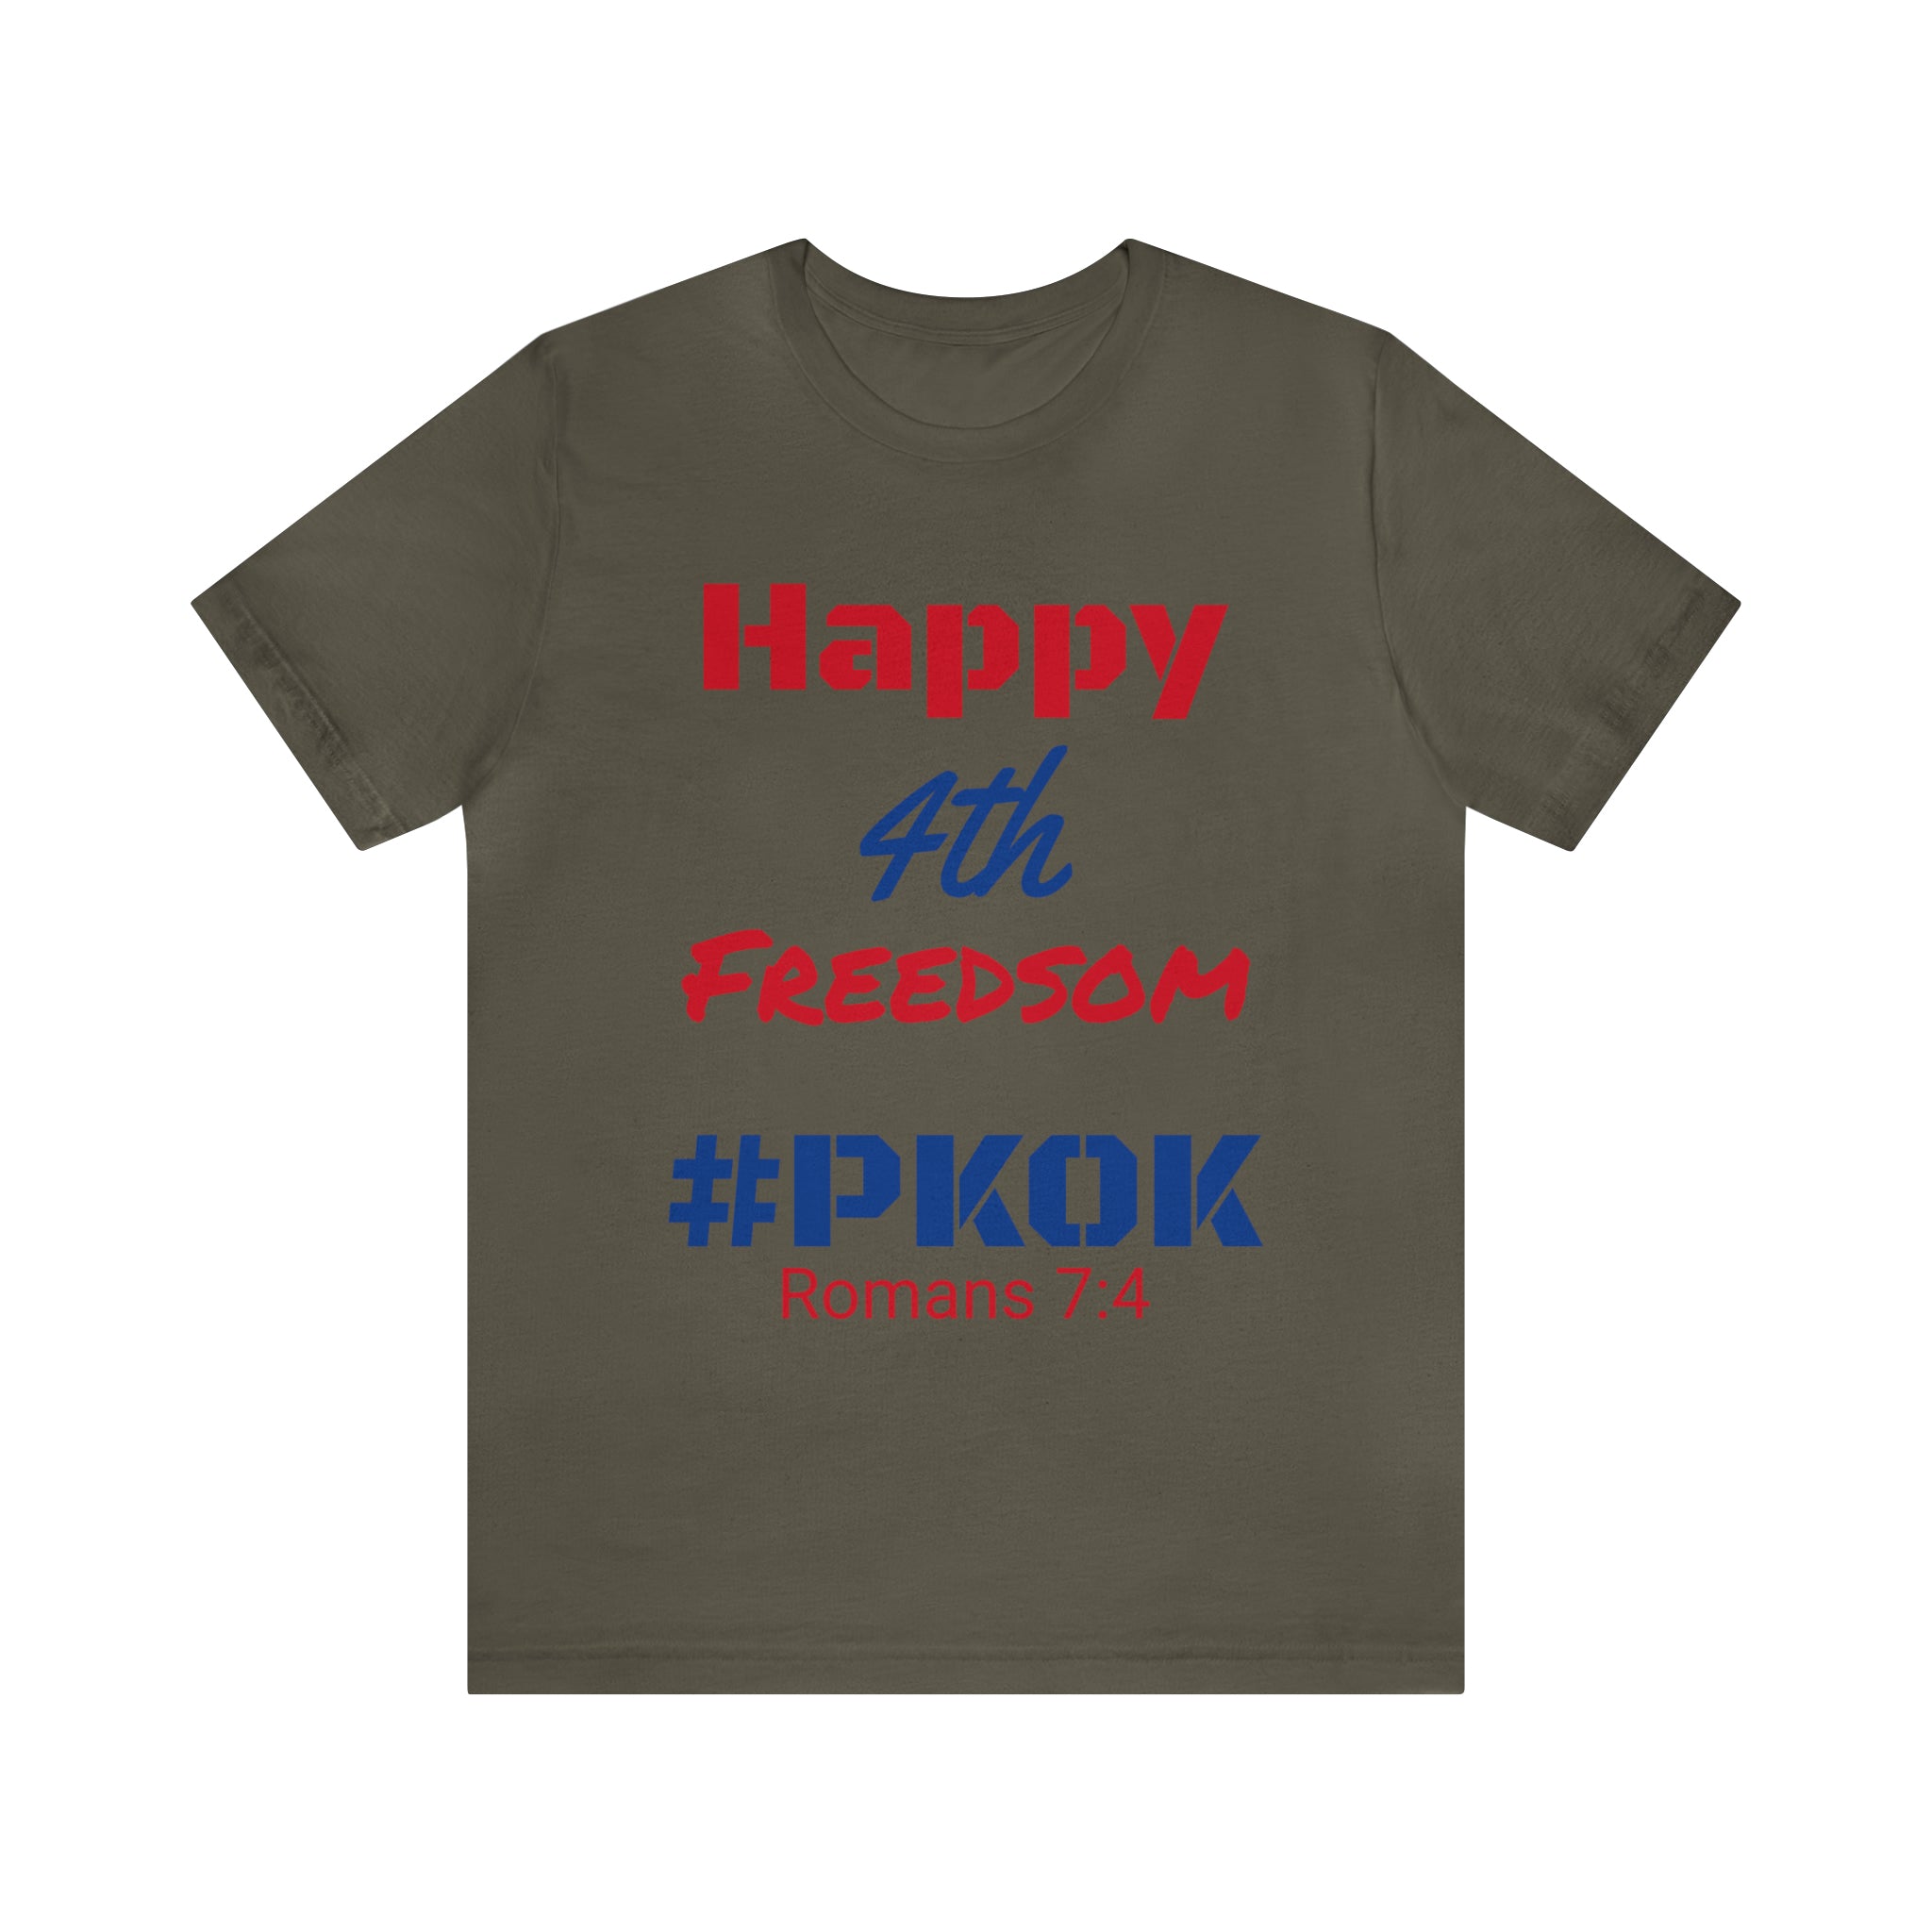 #Freedom 4th  #PKOK #Scripture #July4 #Unisex #Jersey #ShortSleeve #Tee